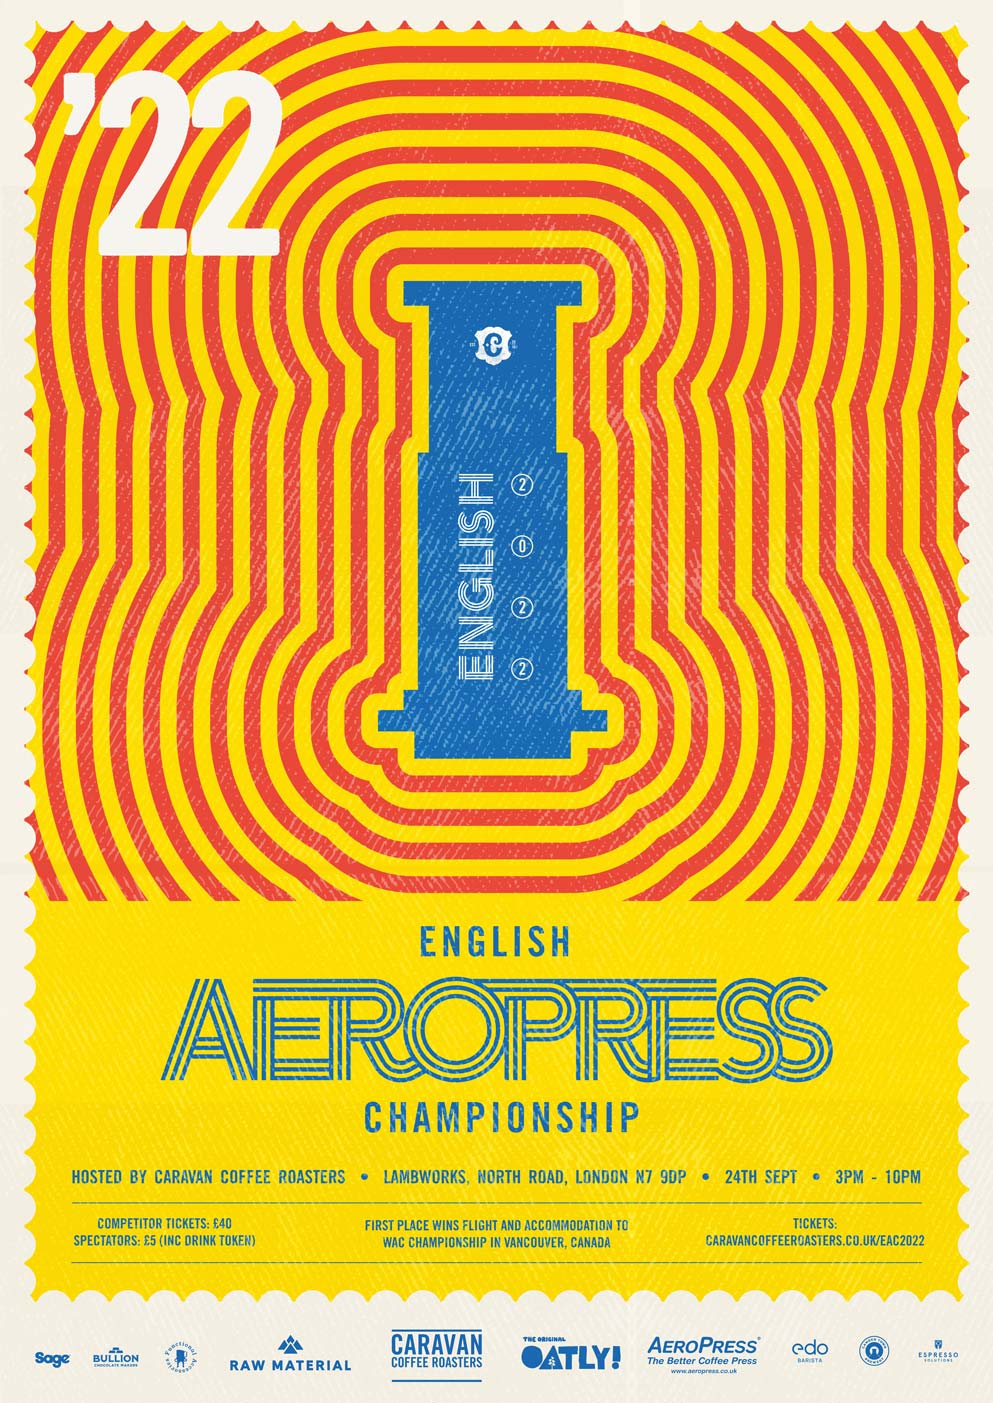 English AeroPress Championship 2022 poster